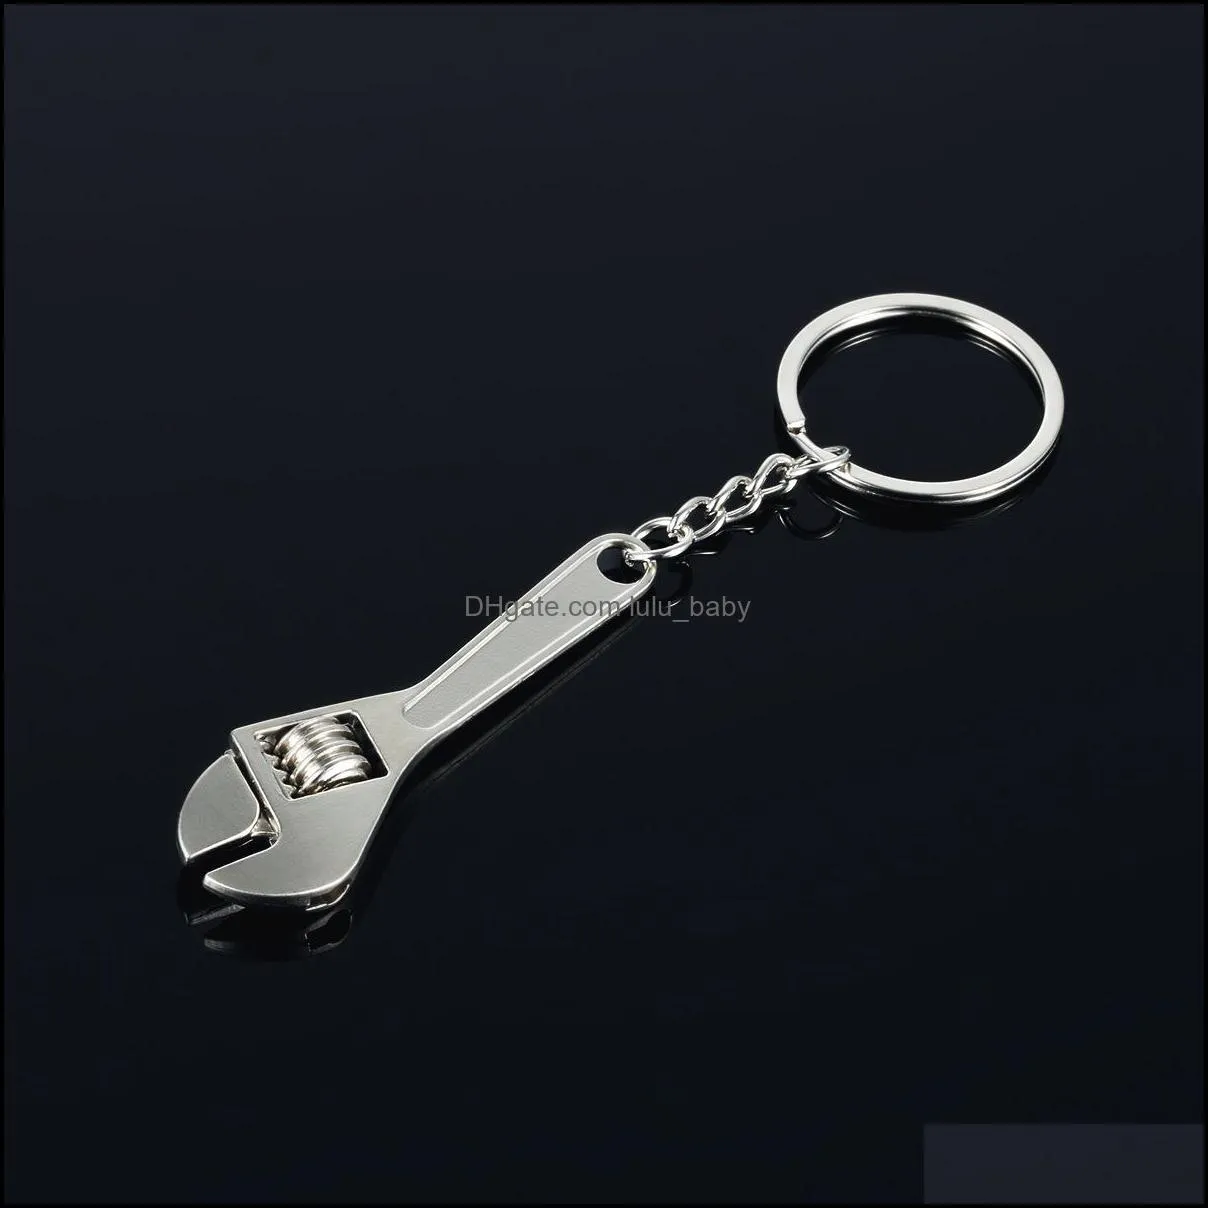 metalwrench key ring mini monkey wrench keychain holder hand tool rings fashion jewelry handbag hangs